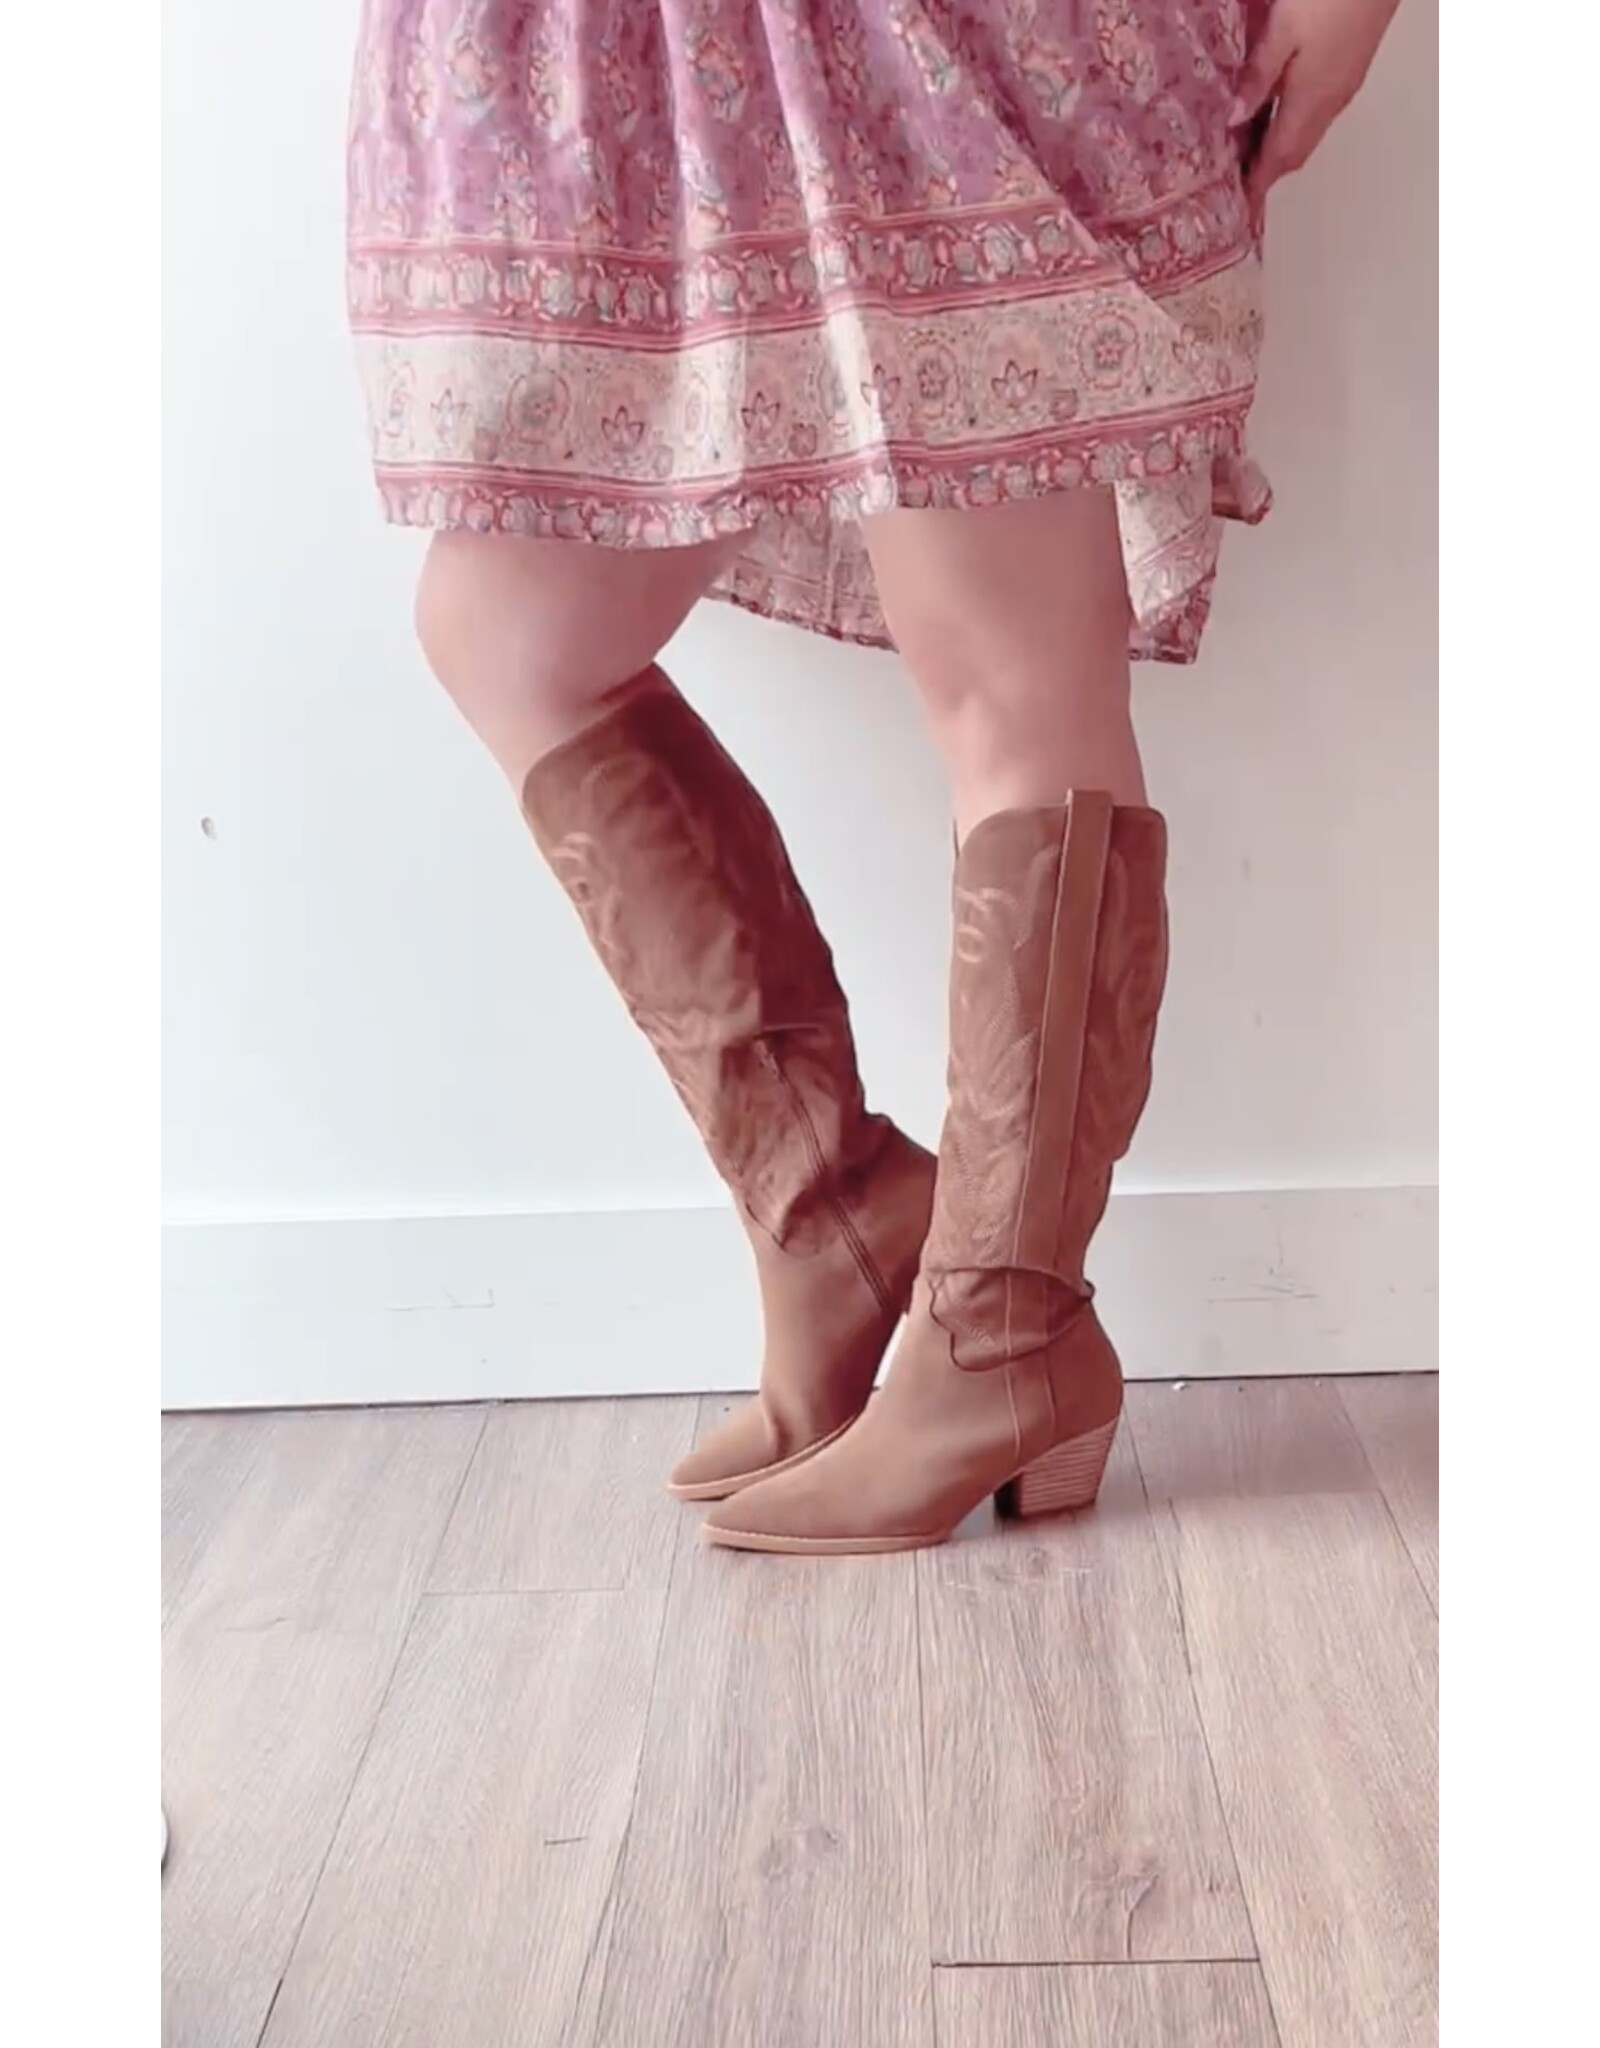 Let's See Style Samara western boot (Brown)